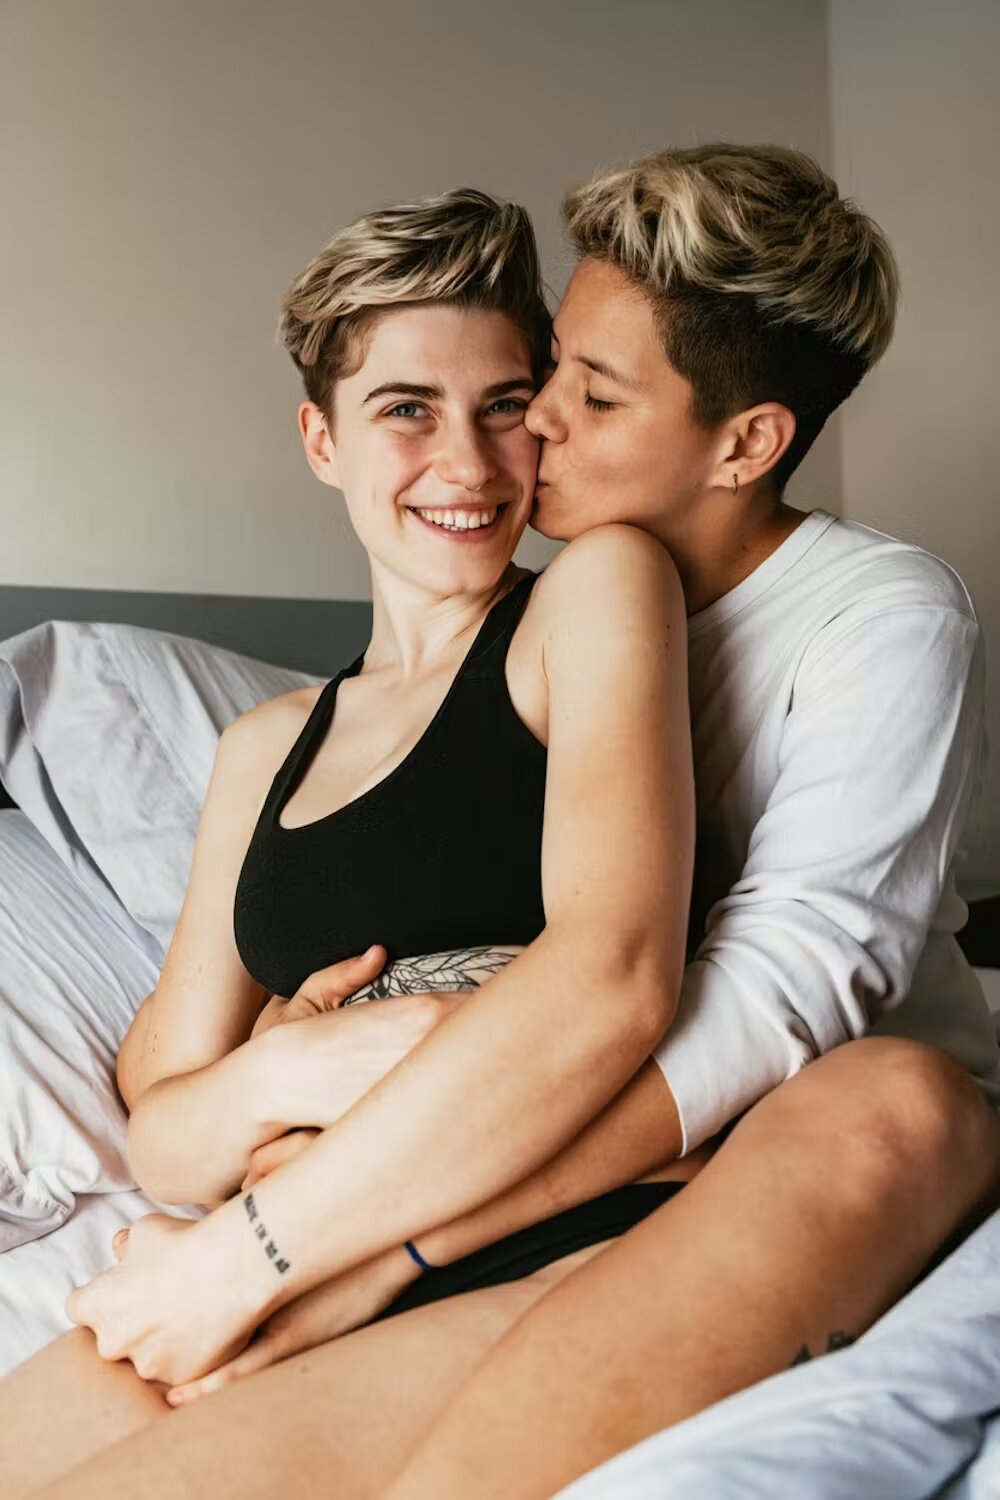 Bellevue transgender BBL model hugging their partner